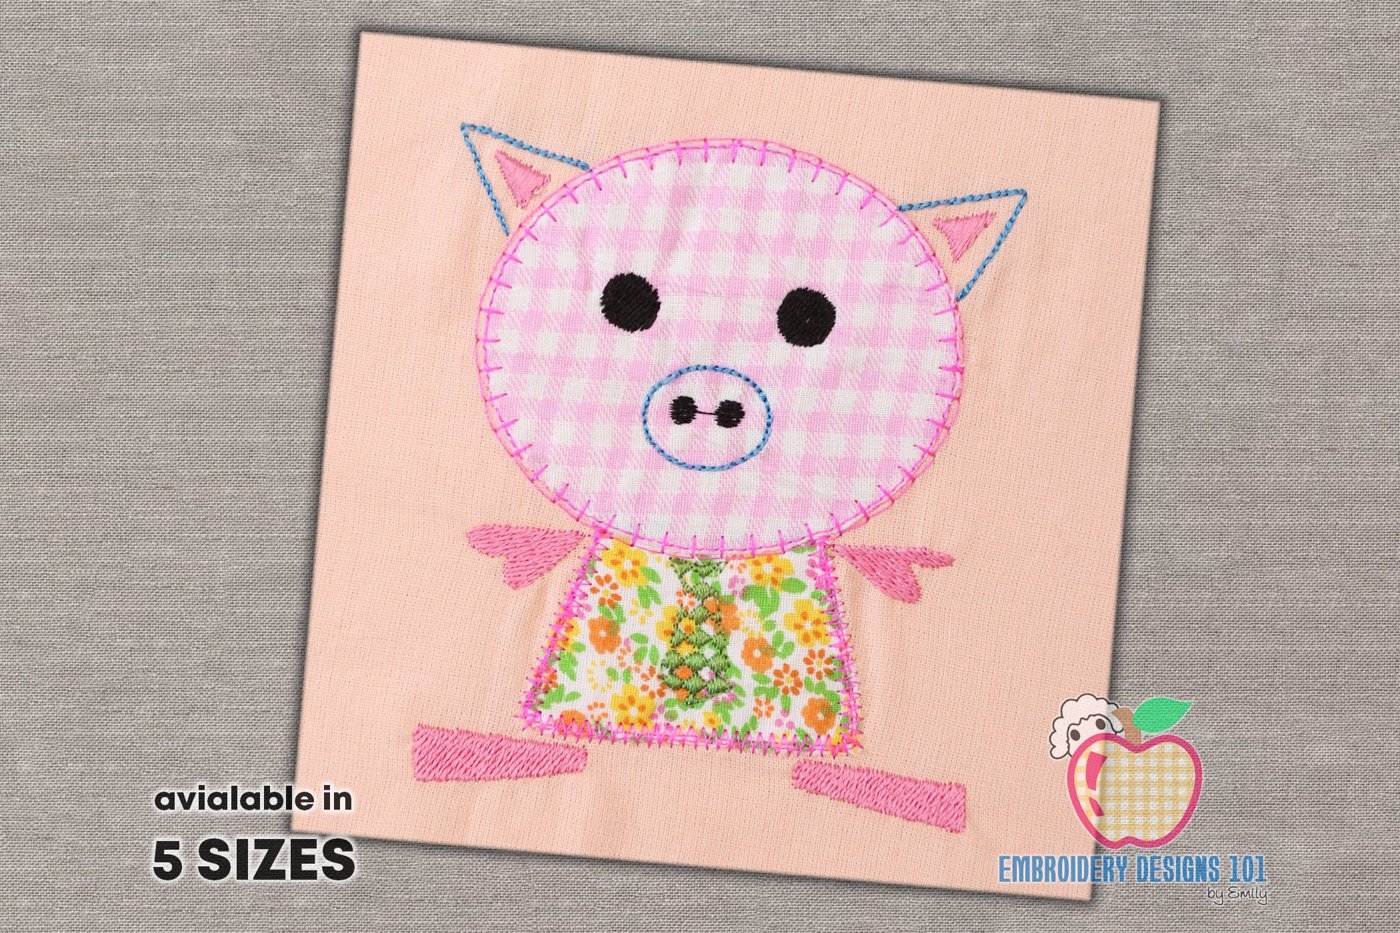 Cute Pig Cartoon Embroidery Applique Designs